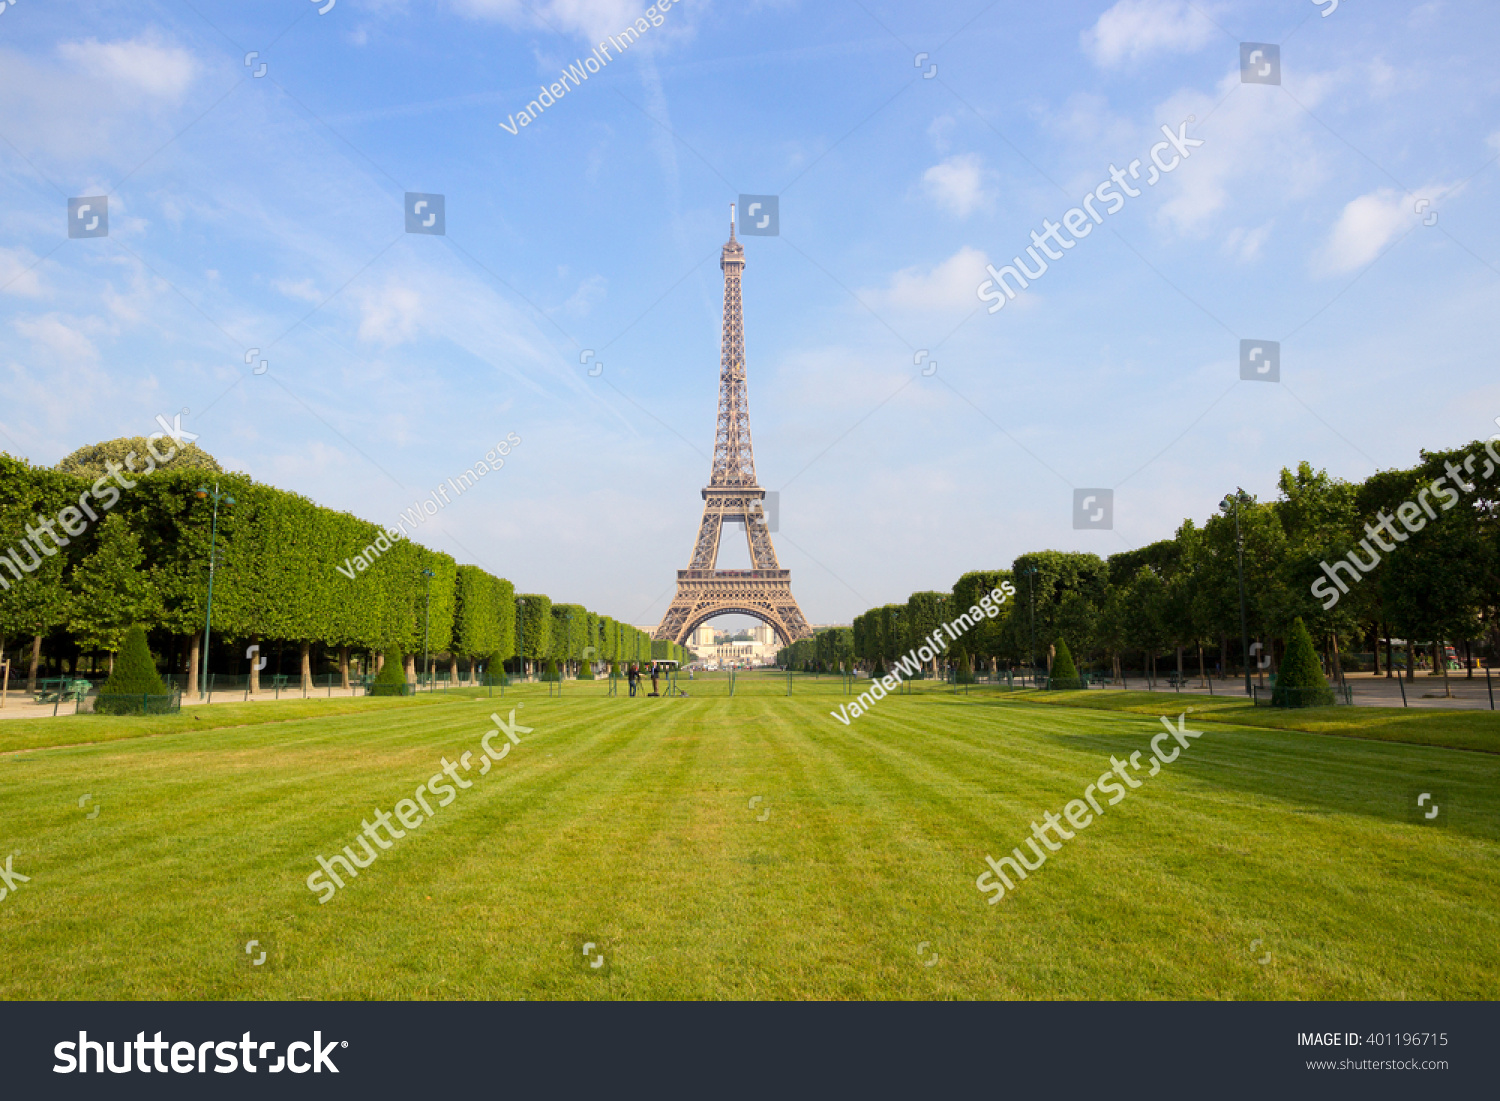 The Eiffel tower in Paris #401196715